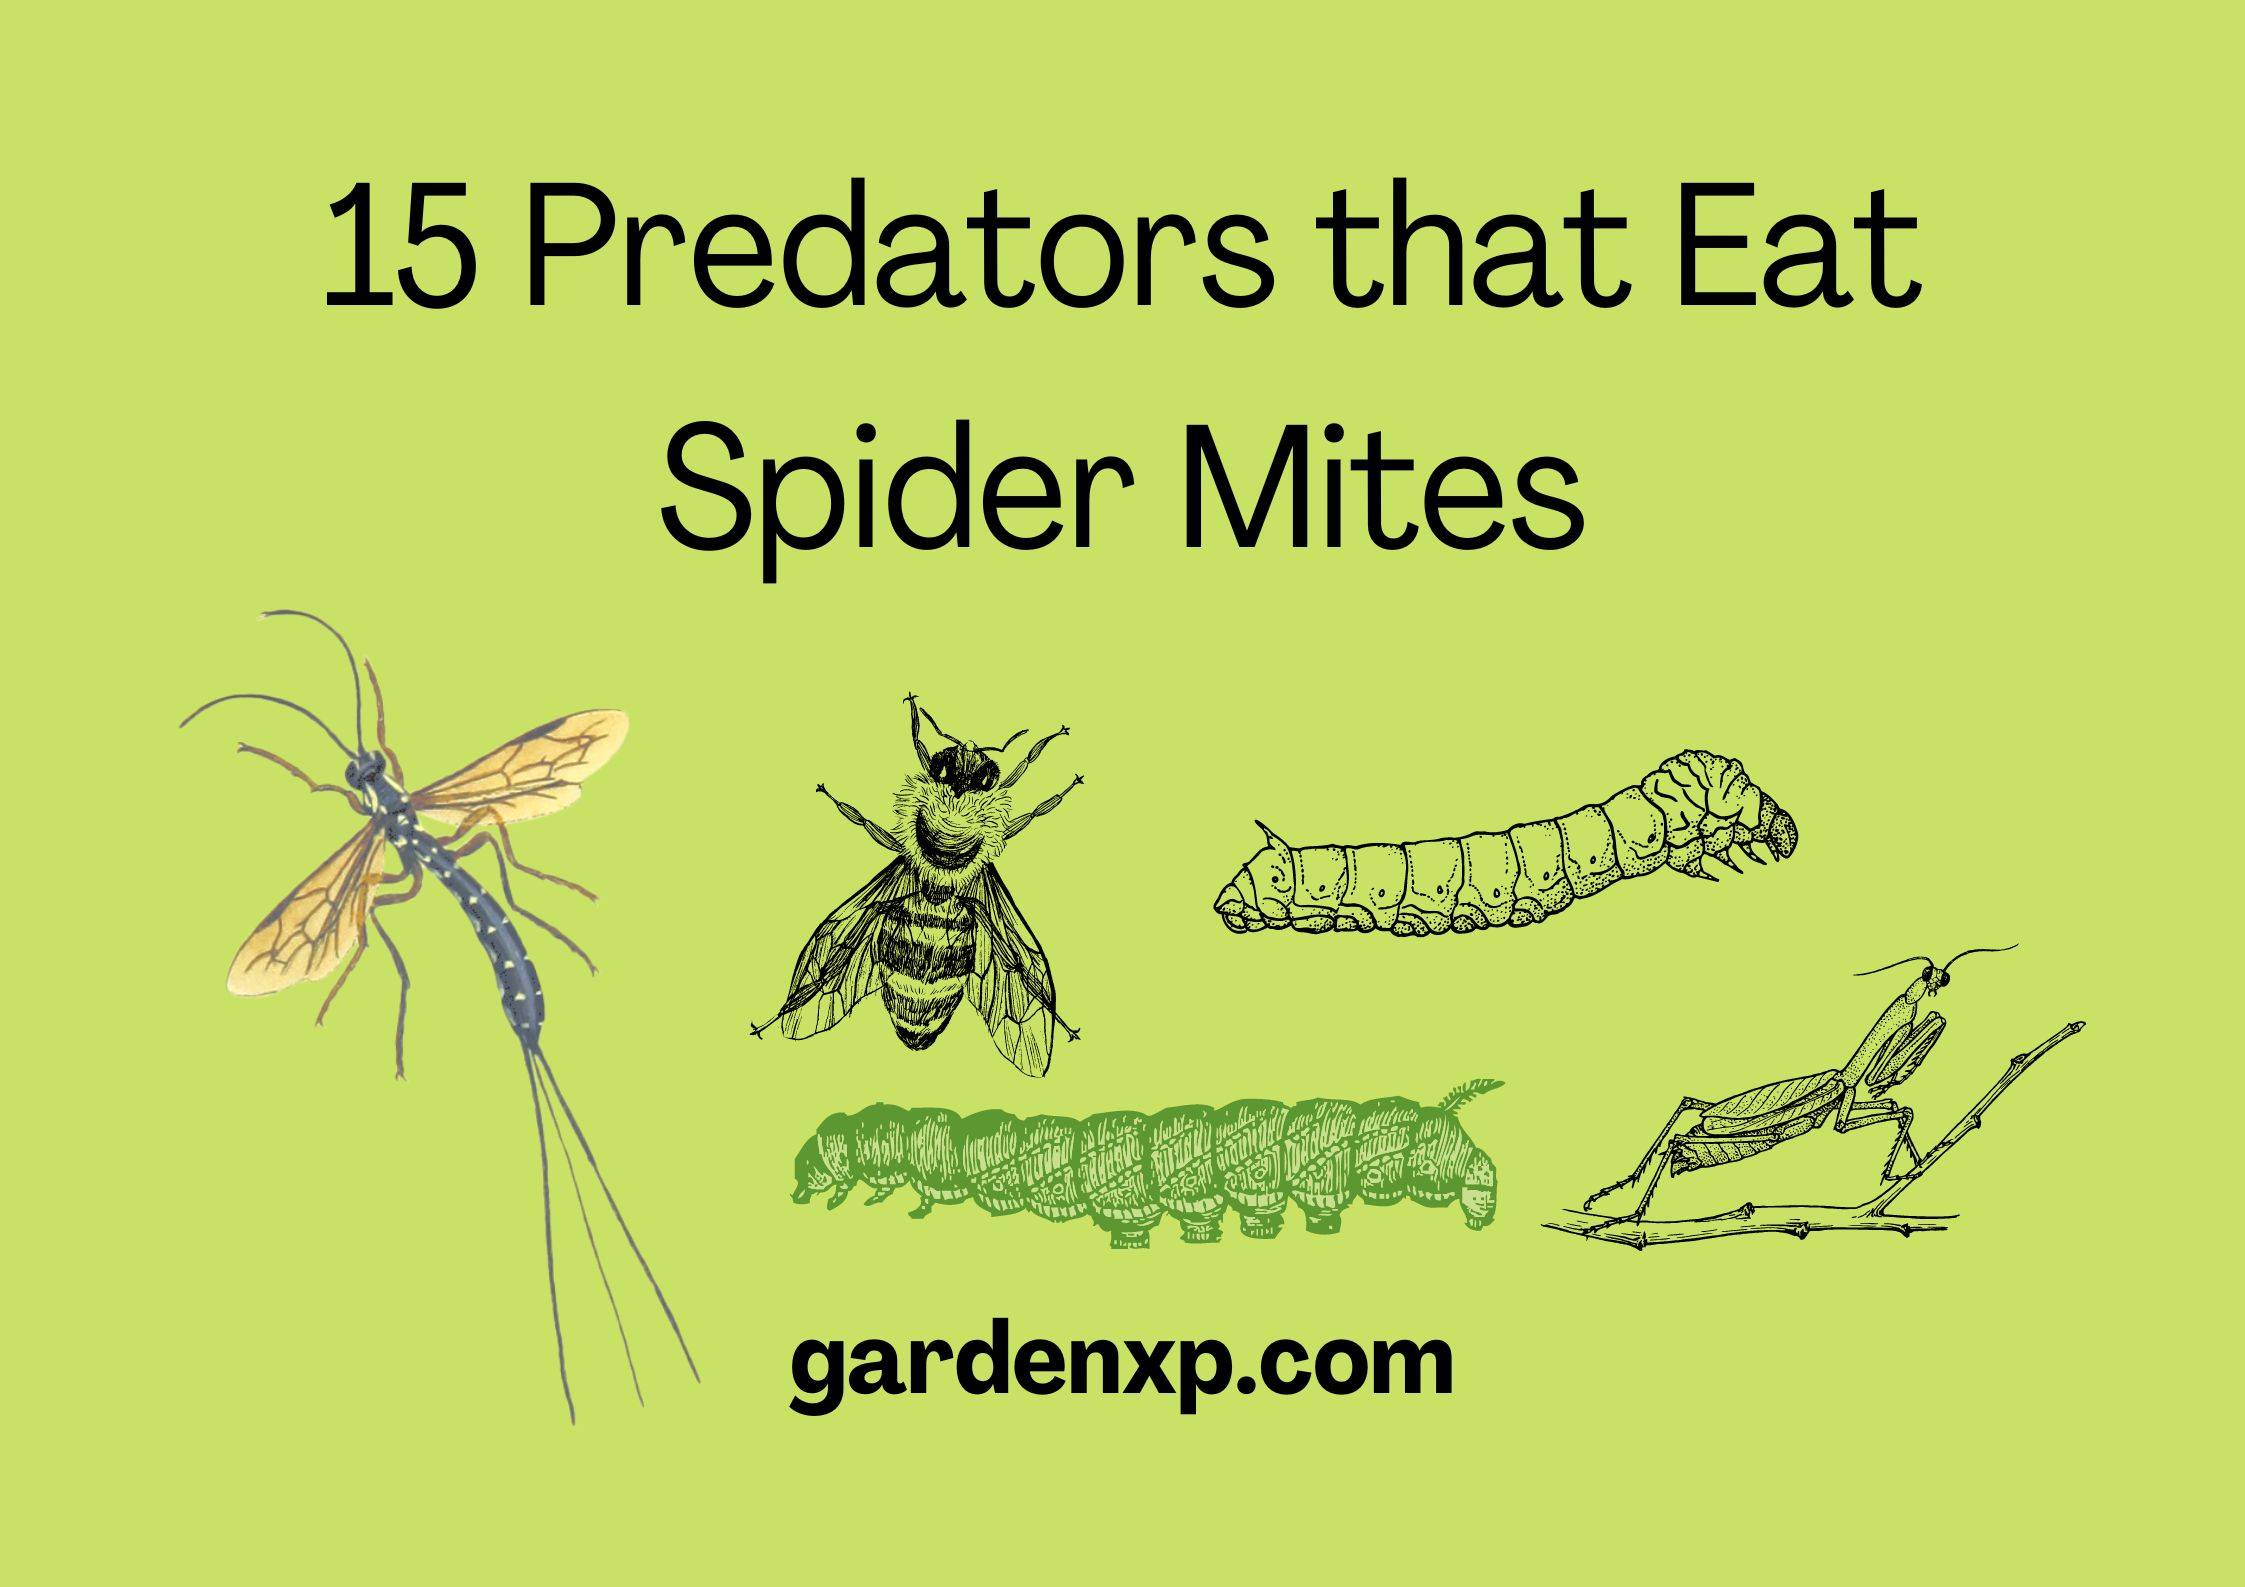 15 Predators that Eat Spider Mites